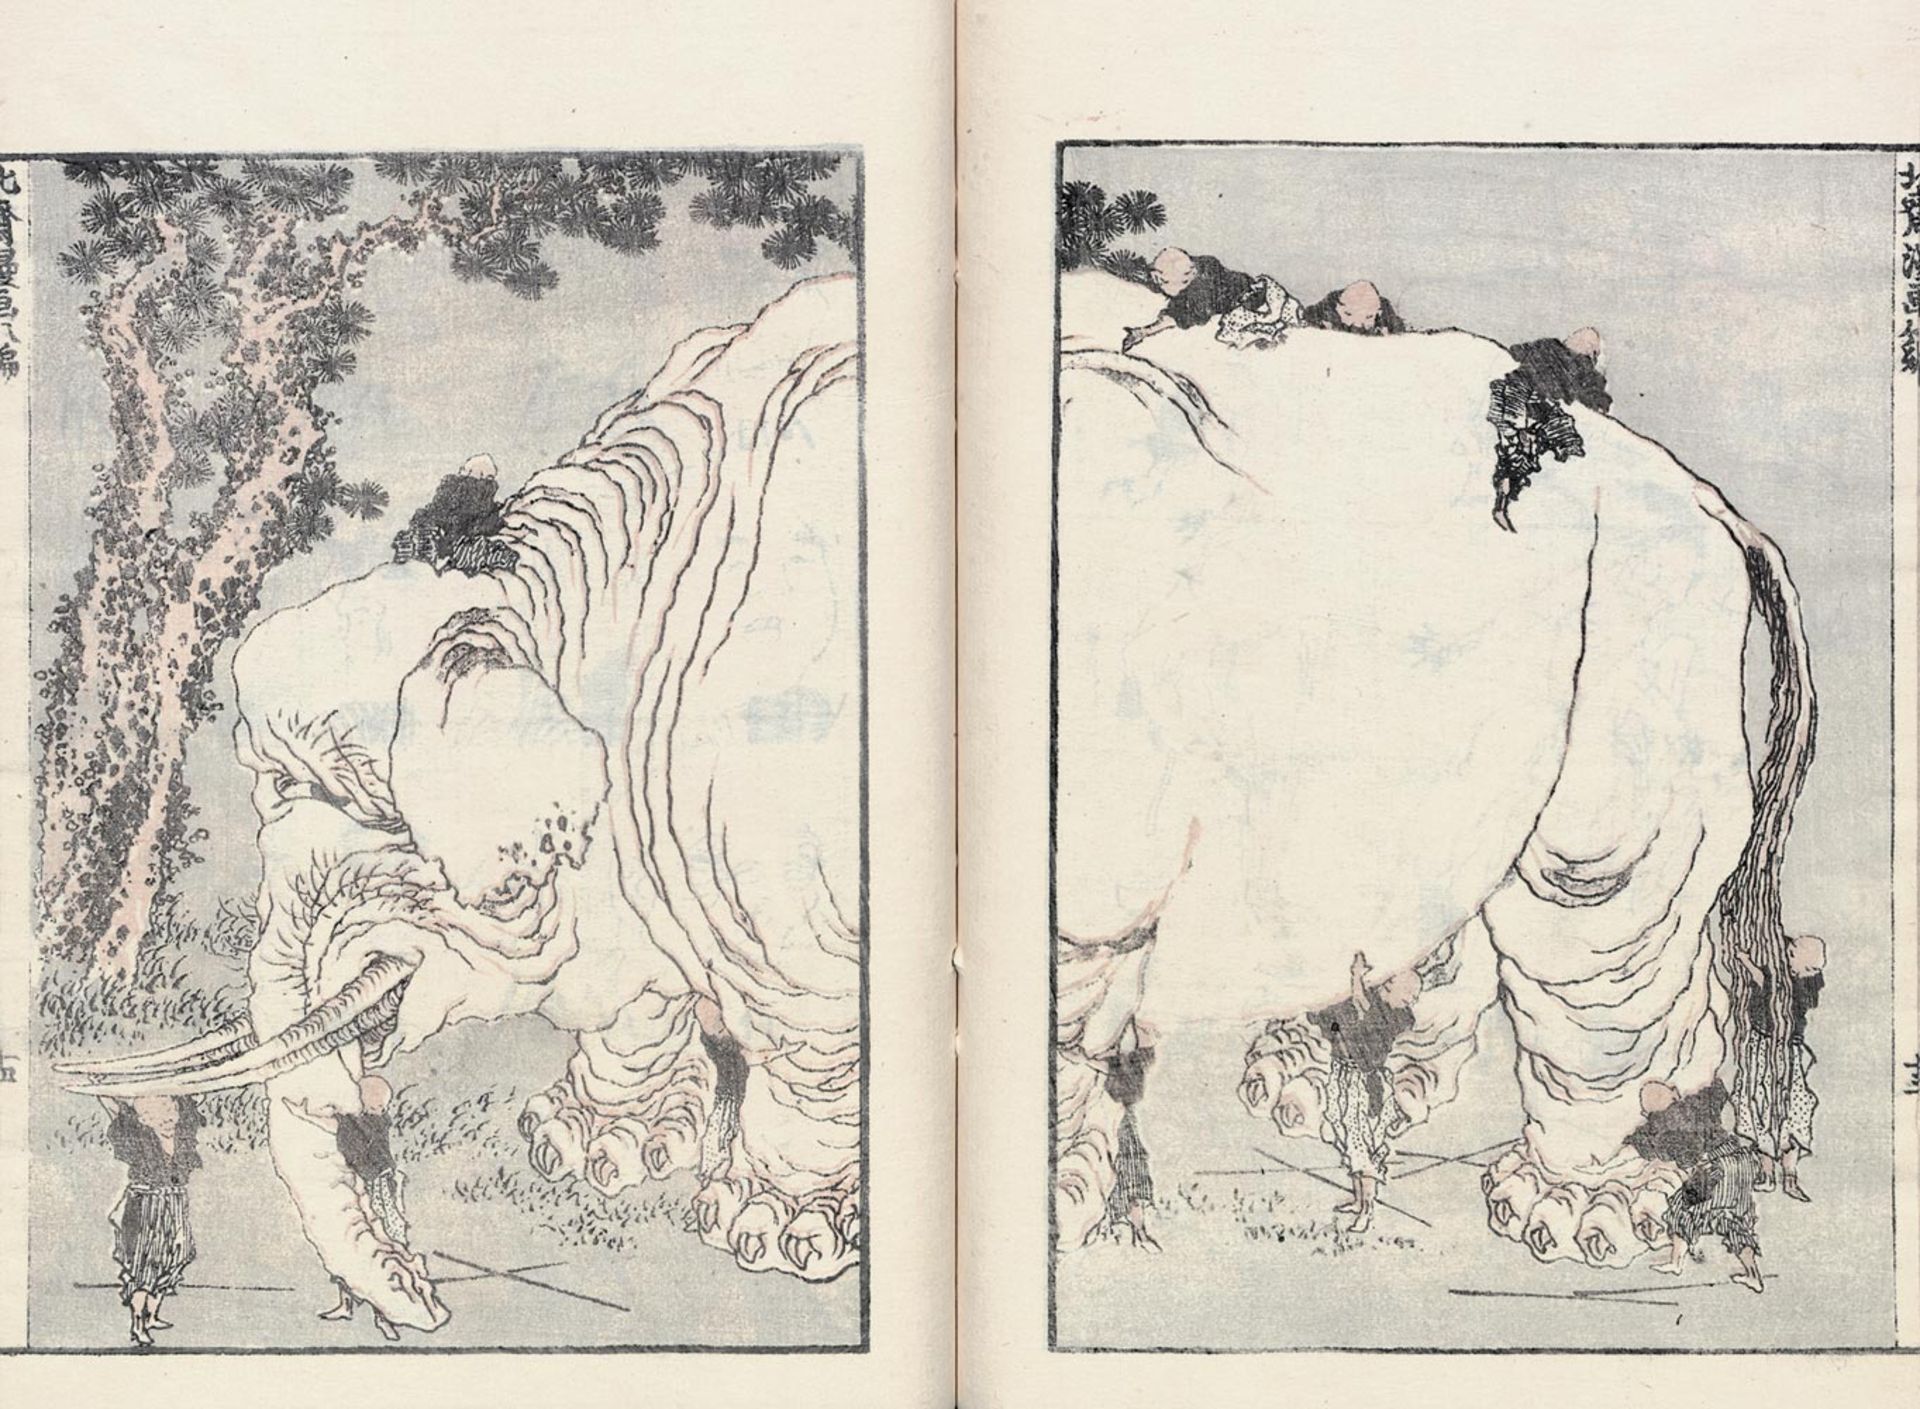 Hokusai, Katsushika: Hokusai-Manga. 14 Hefte mit ungezügelten Bildern